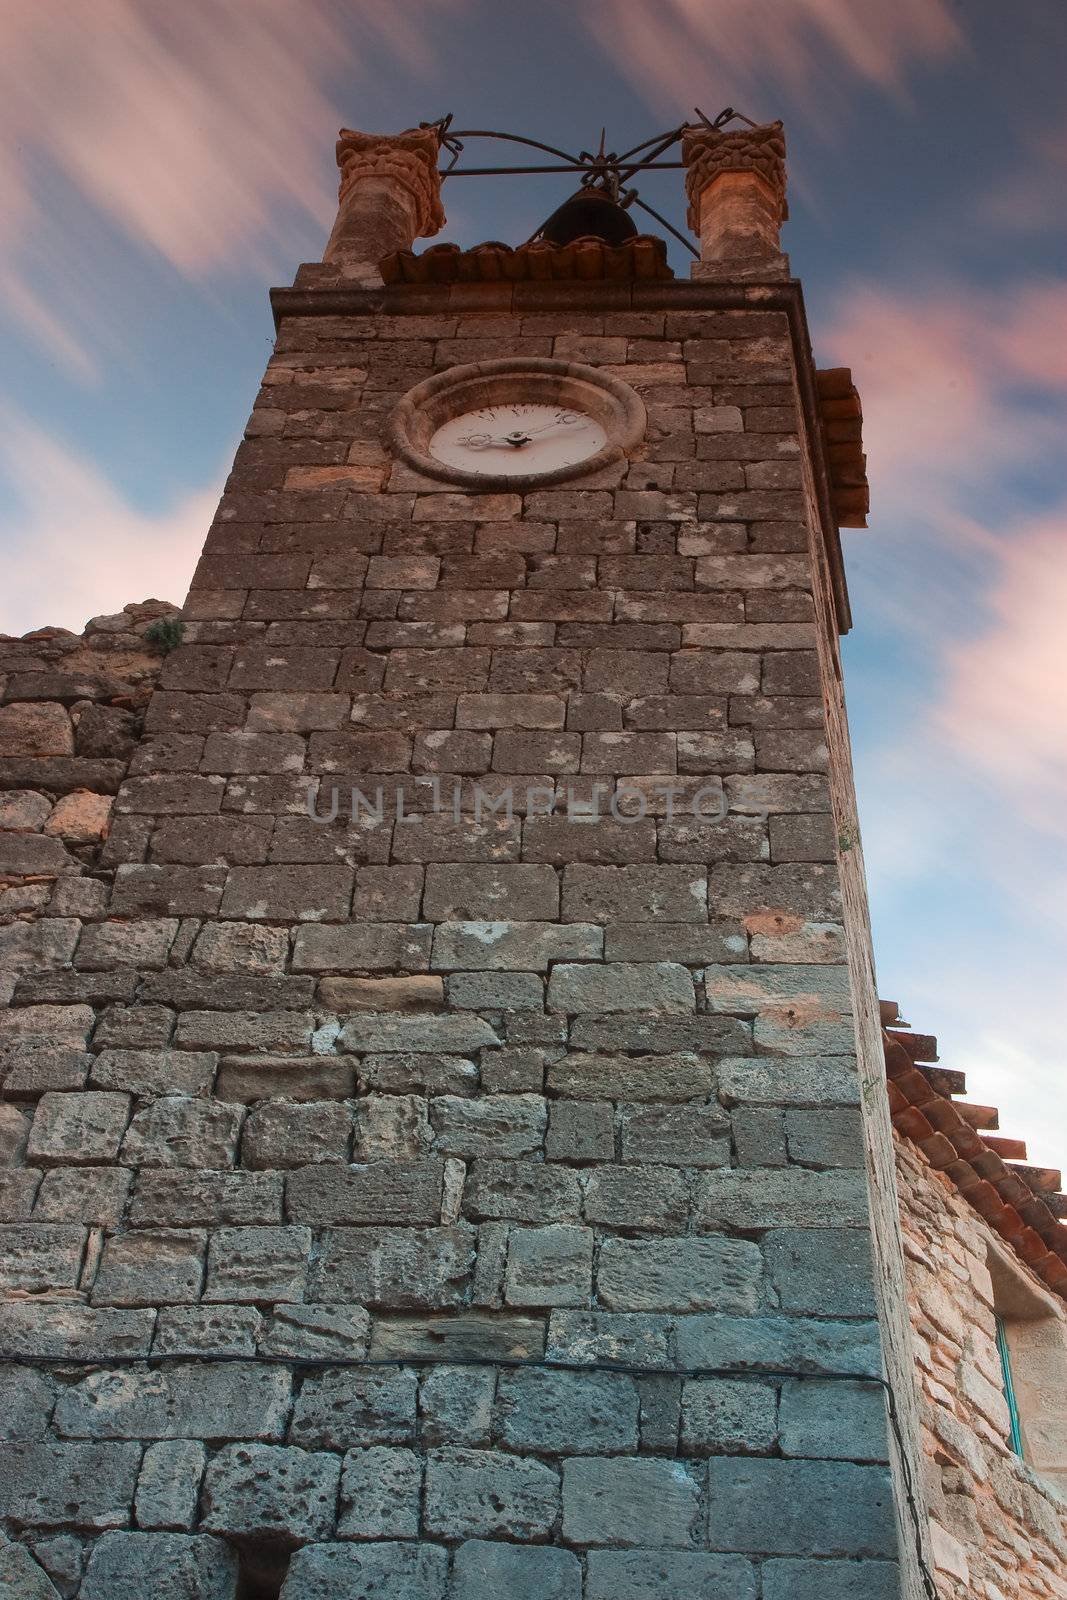 Tower clock by CaptureLight